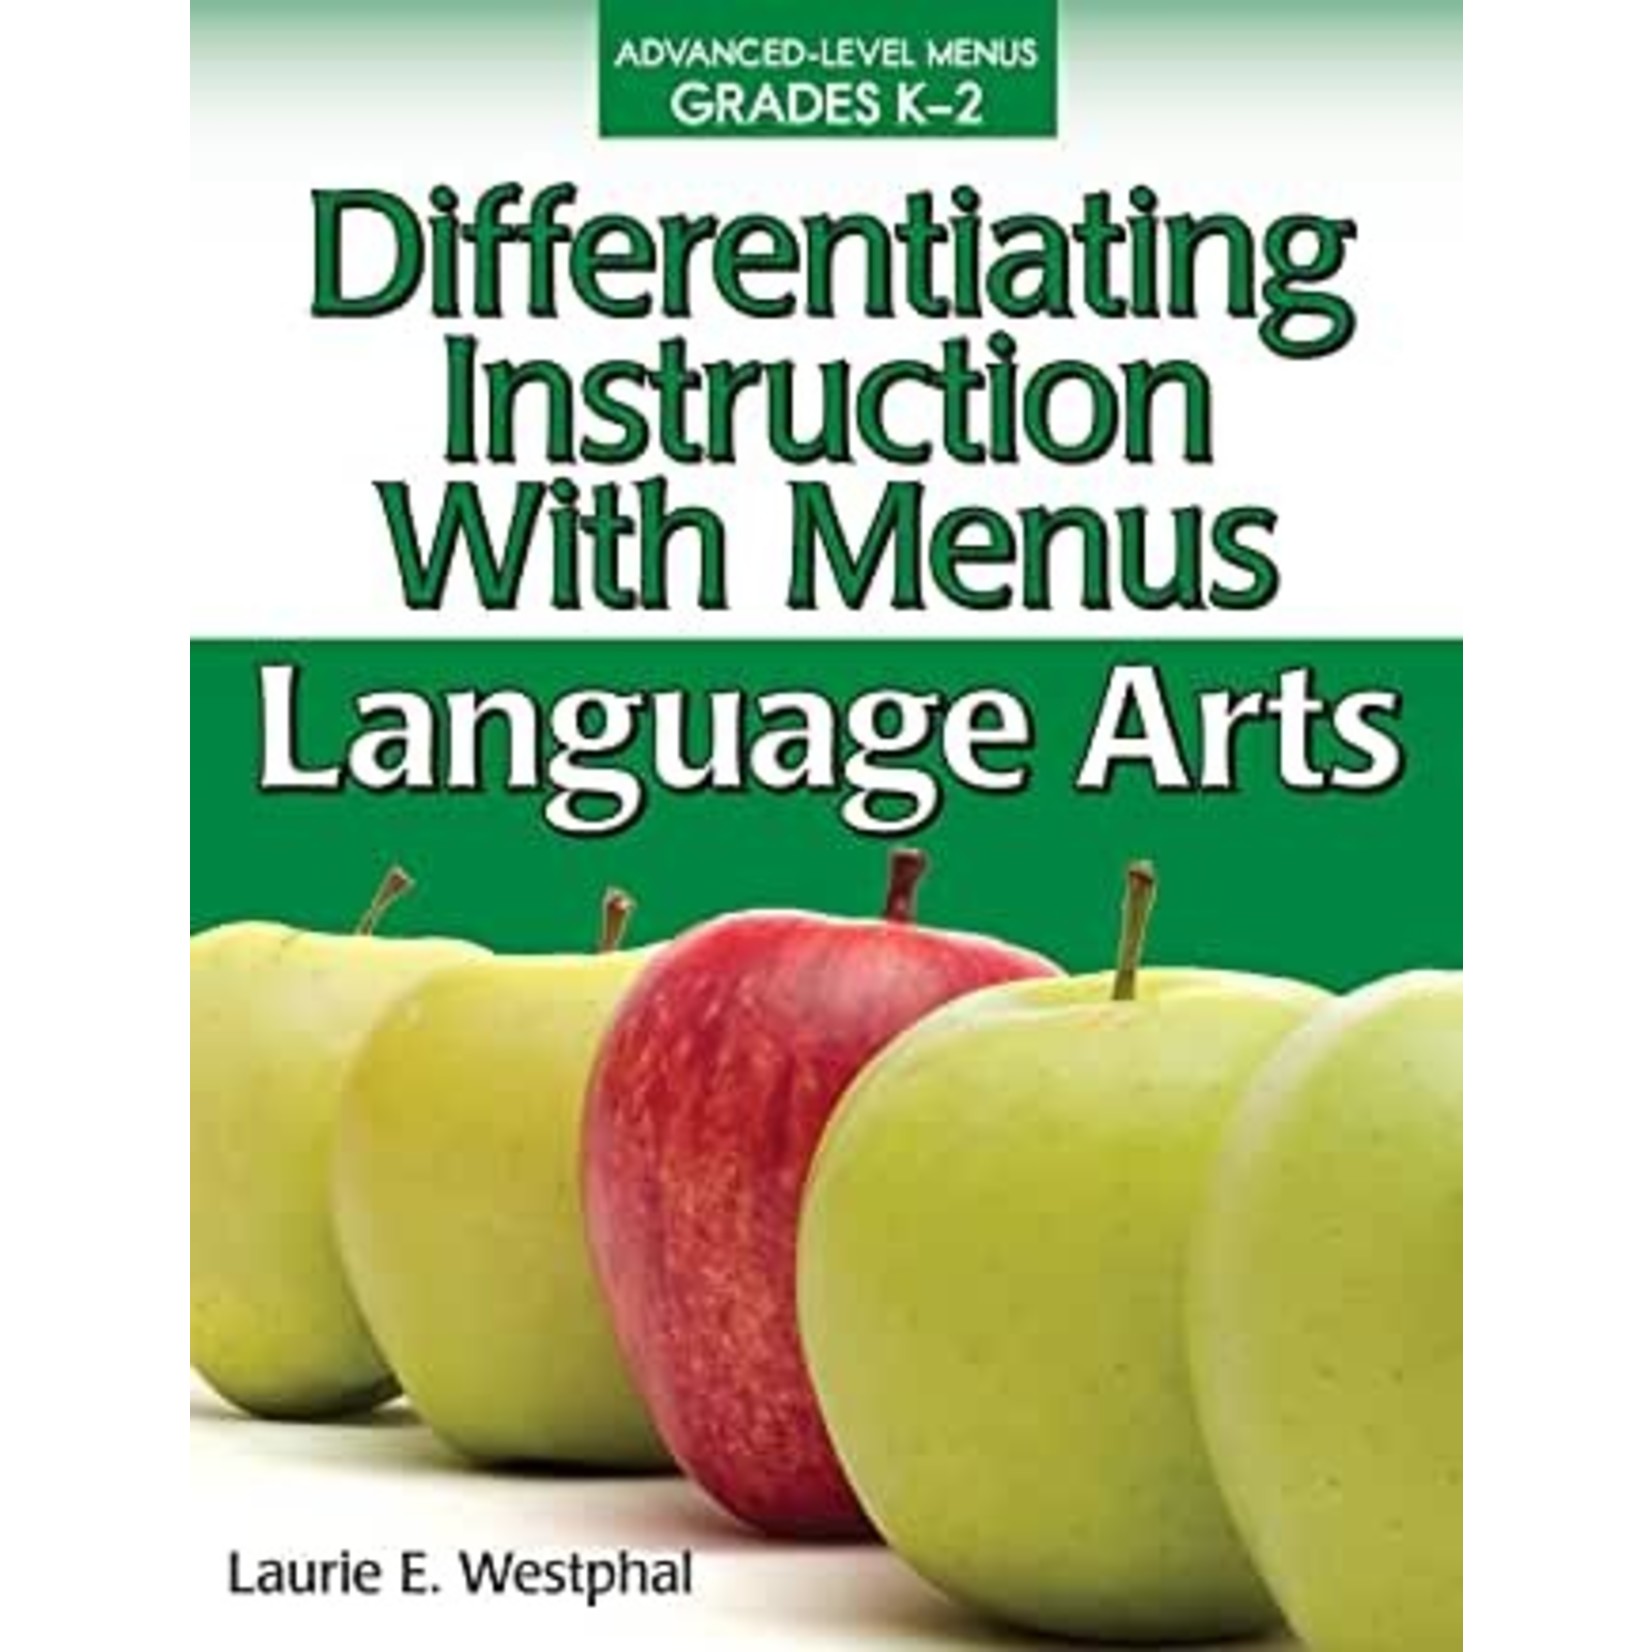 Differentiating Instruction With Menus: Language Arts (Grades K-2) 1st Edition